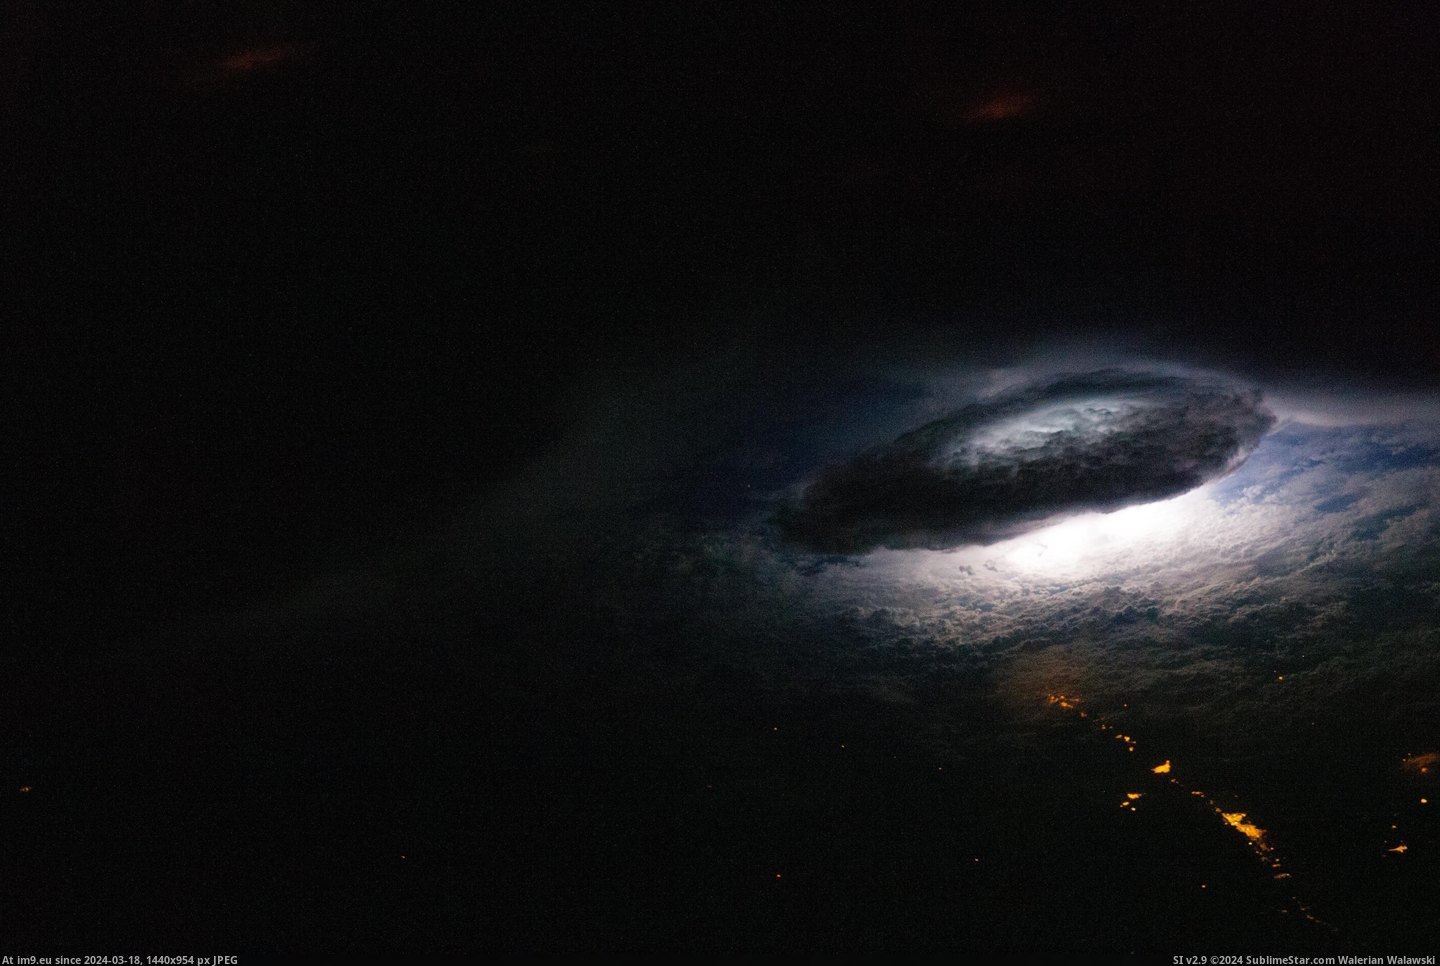 #Space #Nighttime #Thunderstorm [Pics] This is what a nighttime thunderstorm looks like from space Pic. (Bild von album My r/PICS favs))